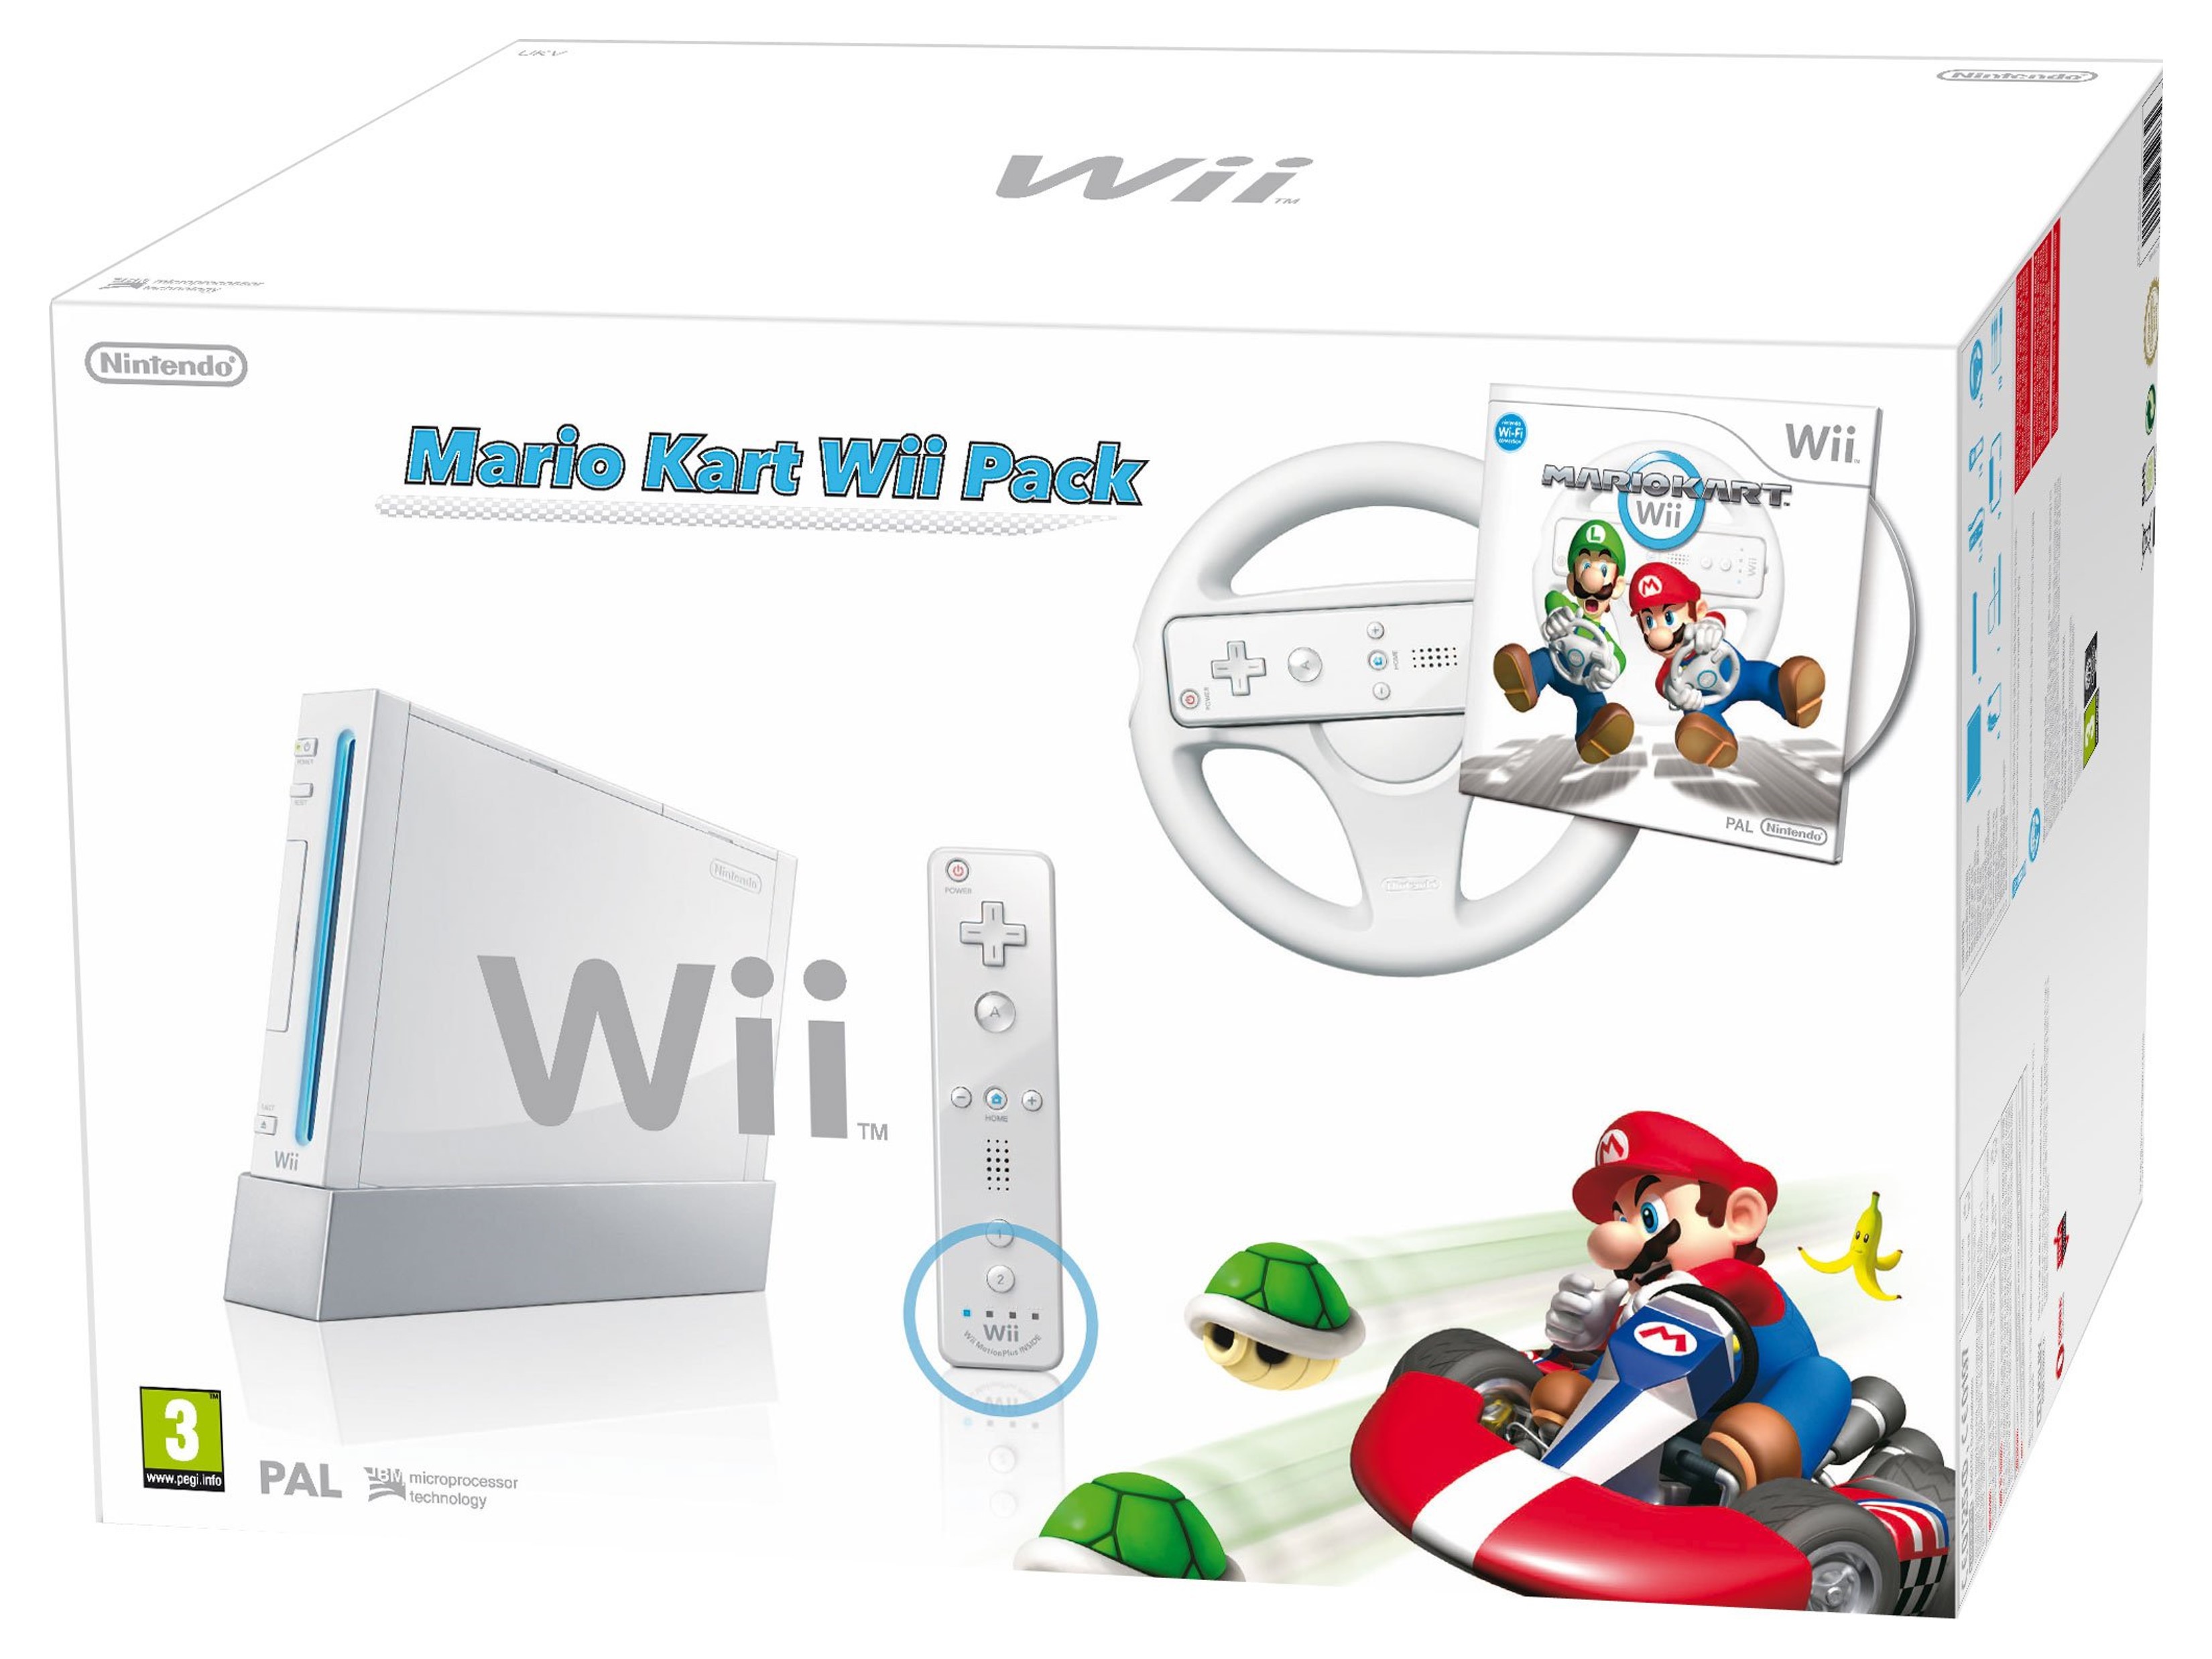 Nintendo Wii Starter Pack - Mario Kart Motion Plus White Edition [Complete] - Wii Hardware